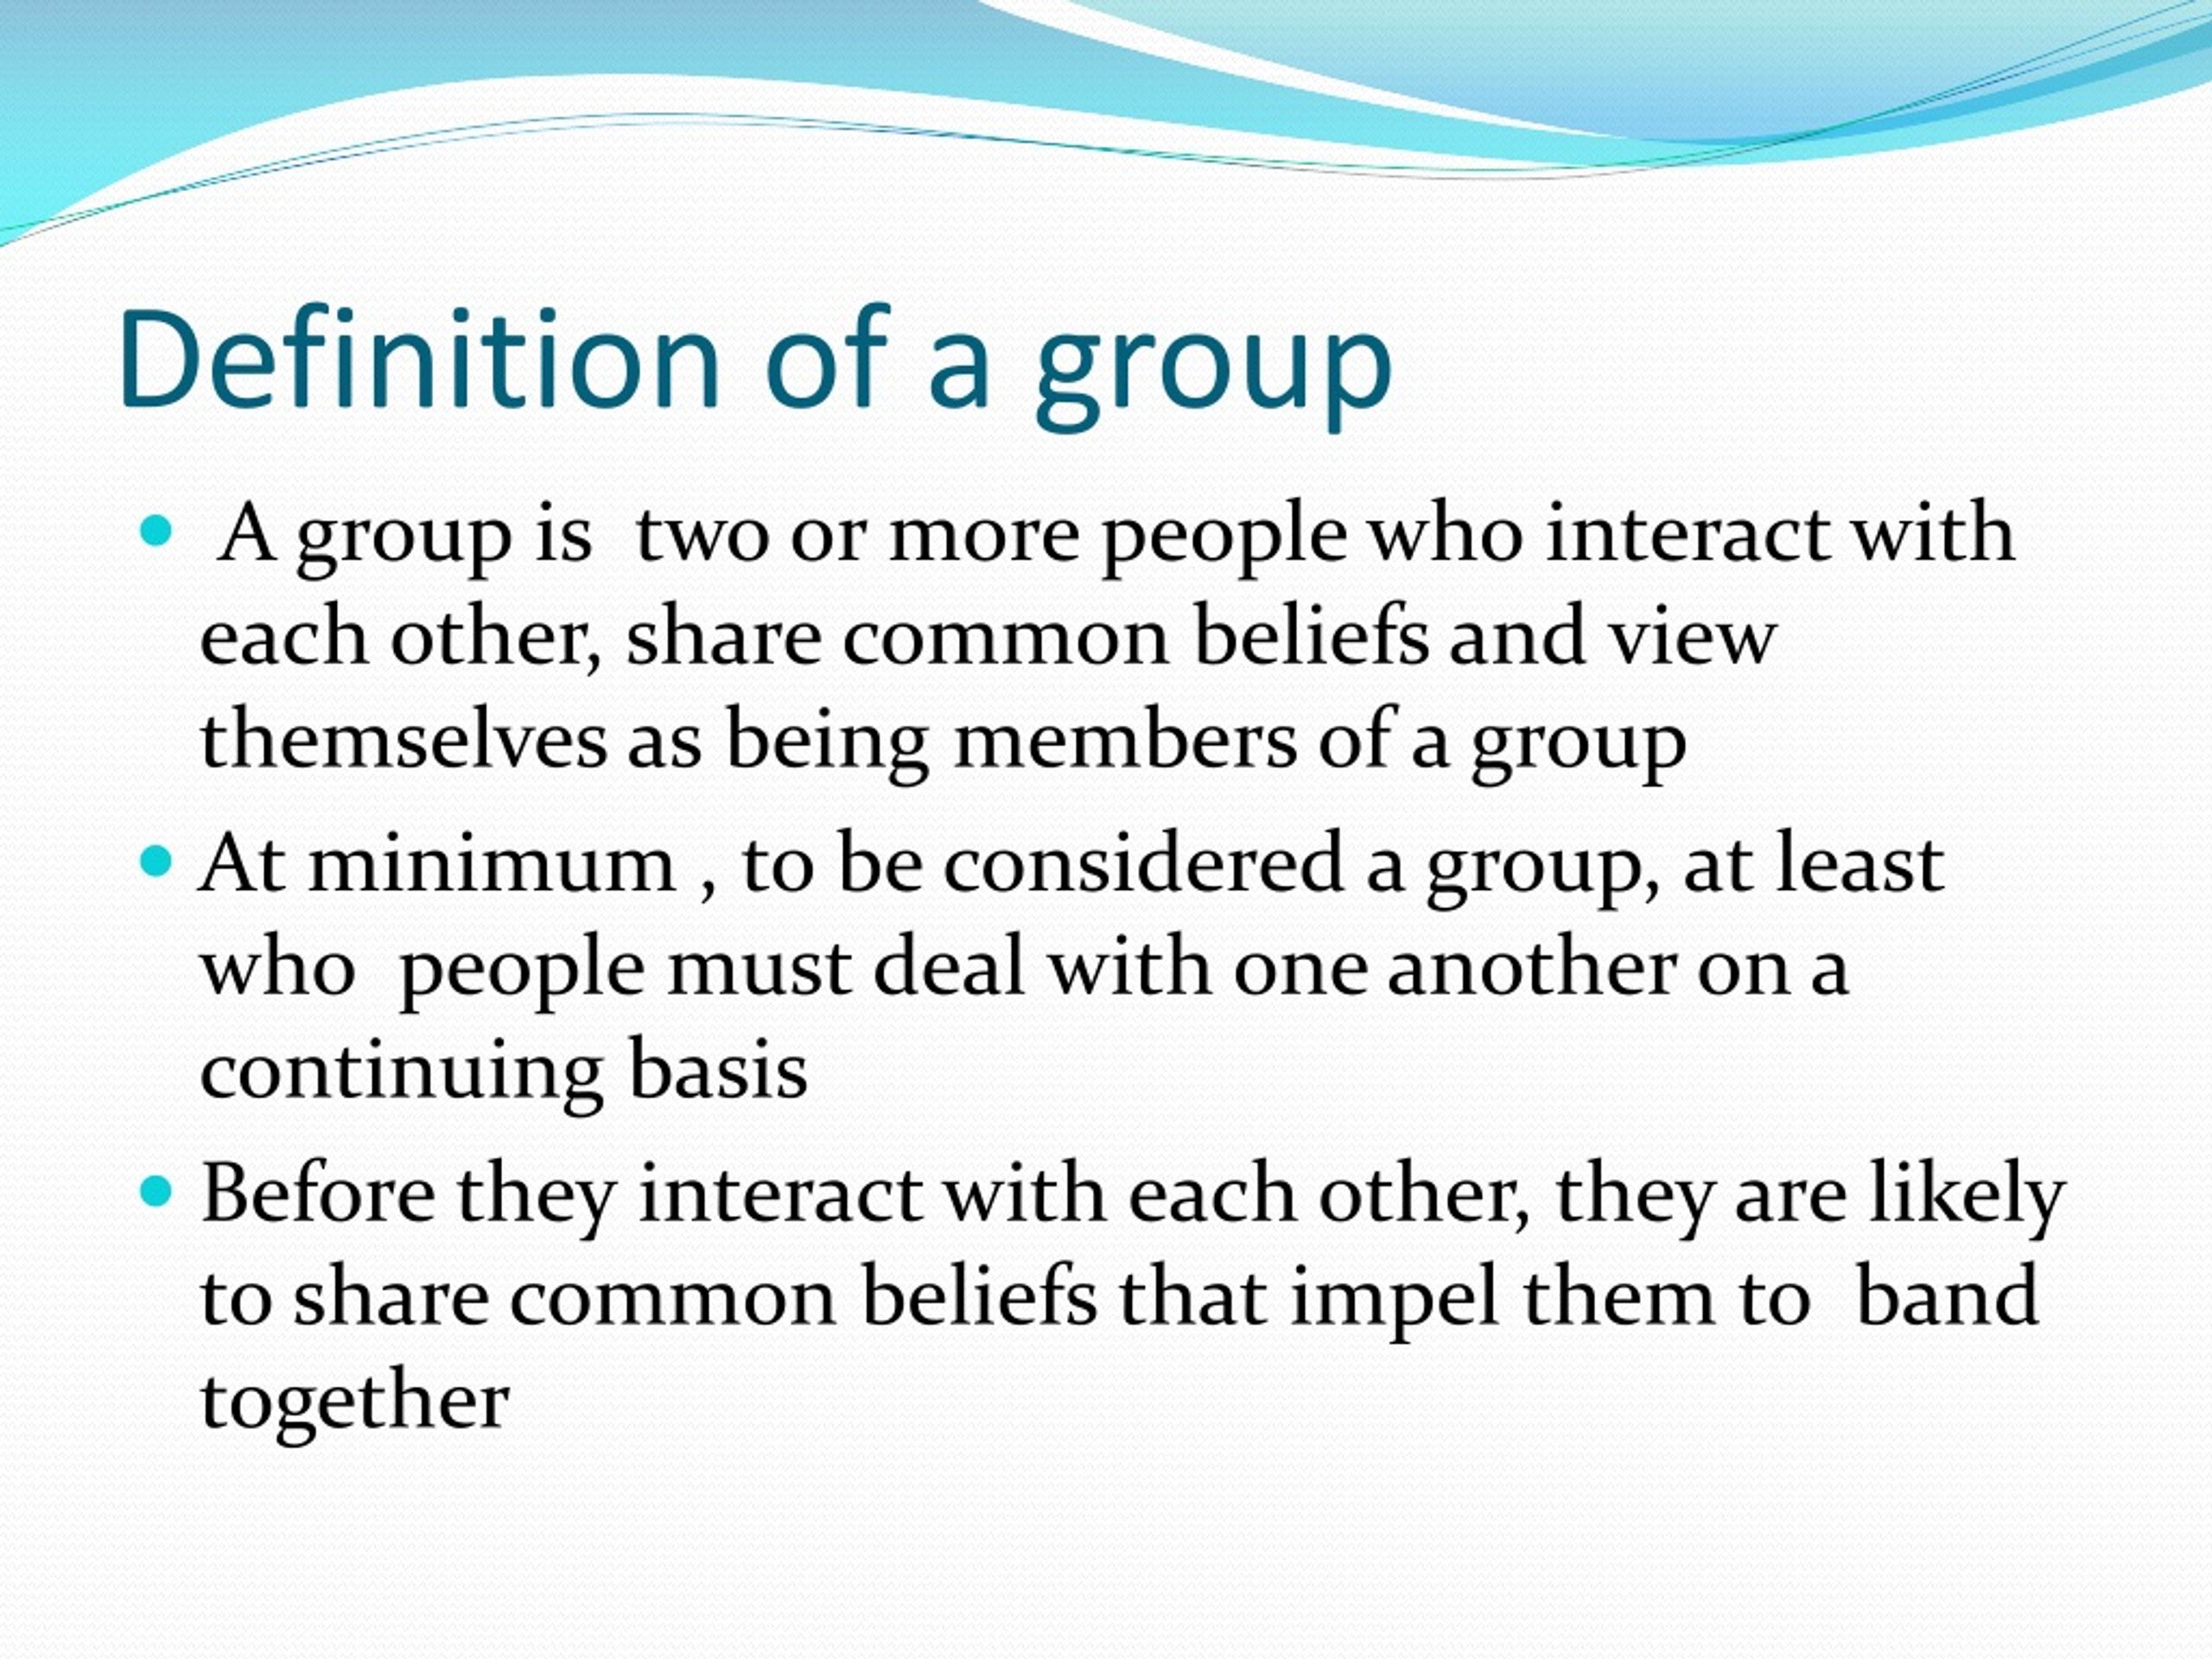 define group methodology